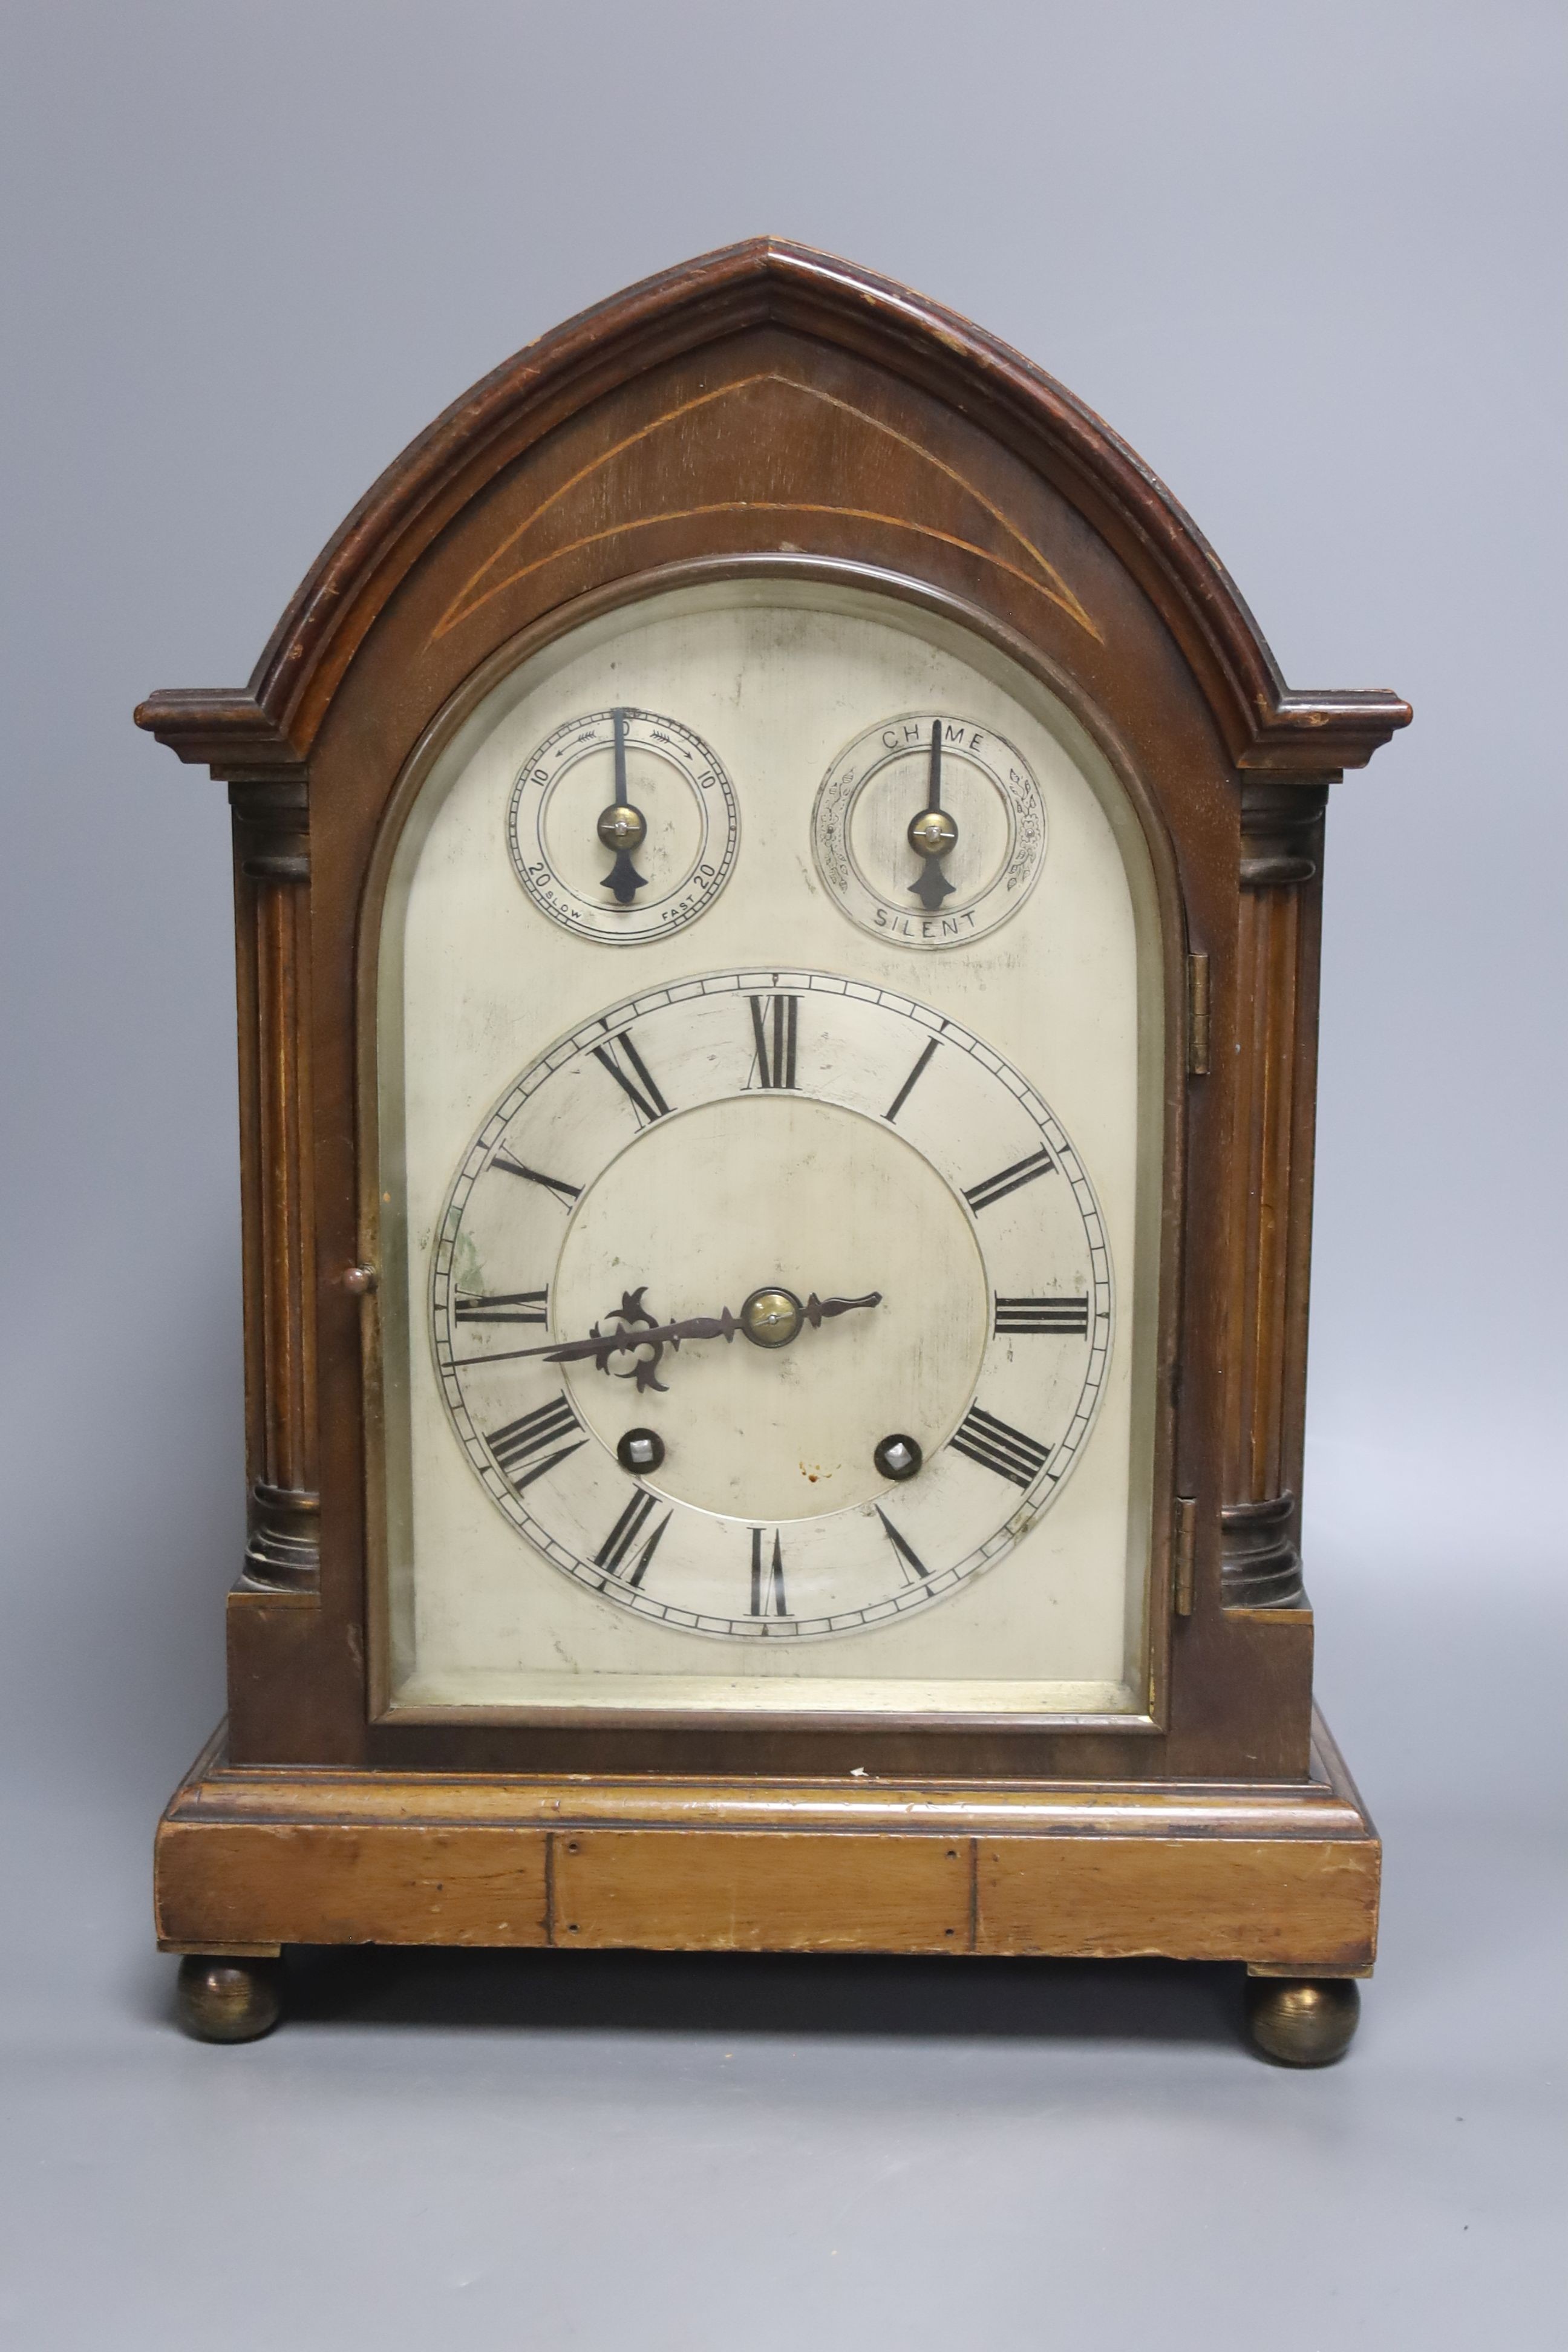 An inlaid mahogany lancet shaped chiming mantel clock with silvered dial, circa 1900. Pendulum and key. 38cm